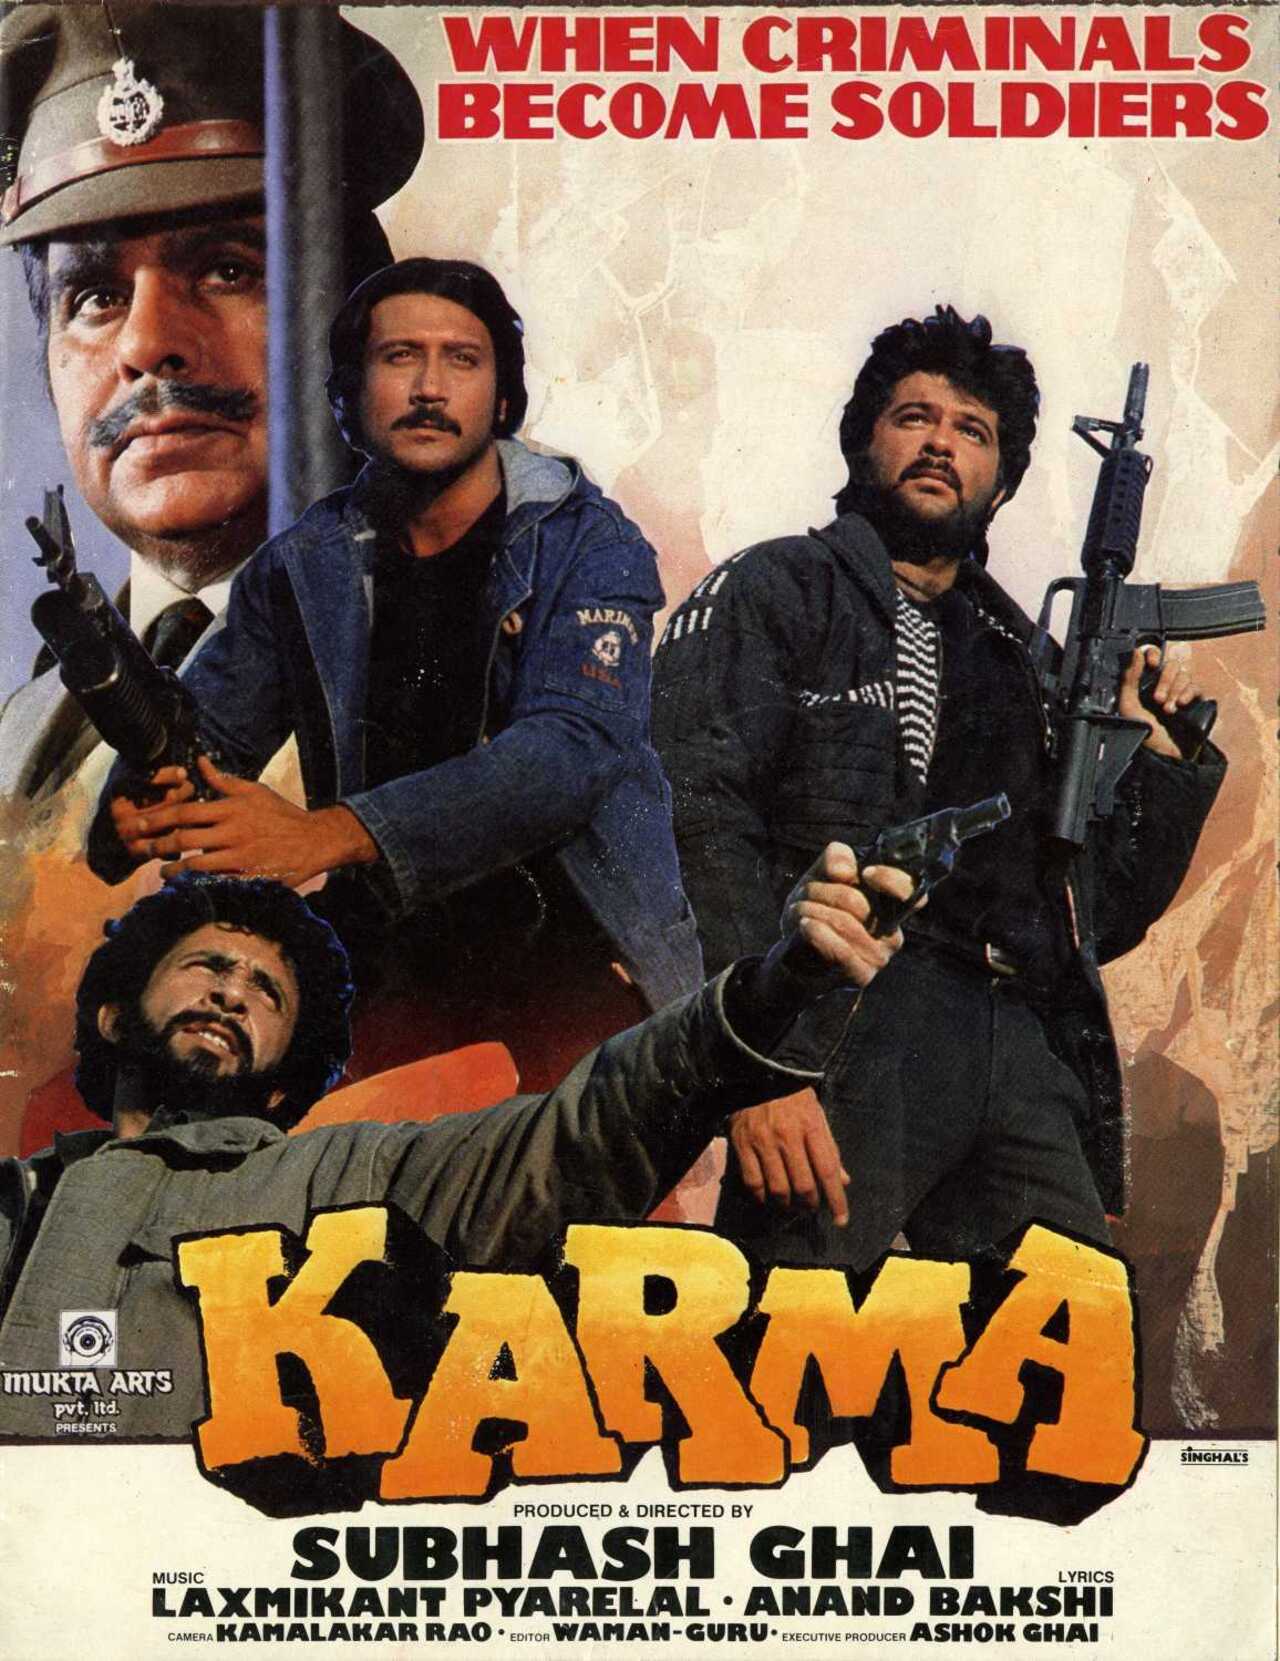 ‘Dil Diya Hai Jaan Bhi Denge’ is a popular Hindi song from the 1986 Bollywood film ‘Karma.’ The movie was directed by Subhash Ghai and featured an ensemble cast, including Dilip Kumar, Nutan, Anil Kapoor, Jackie Shroff, Naseeruddin Shah, and Sridevi